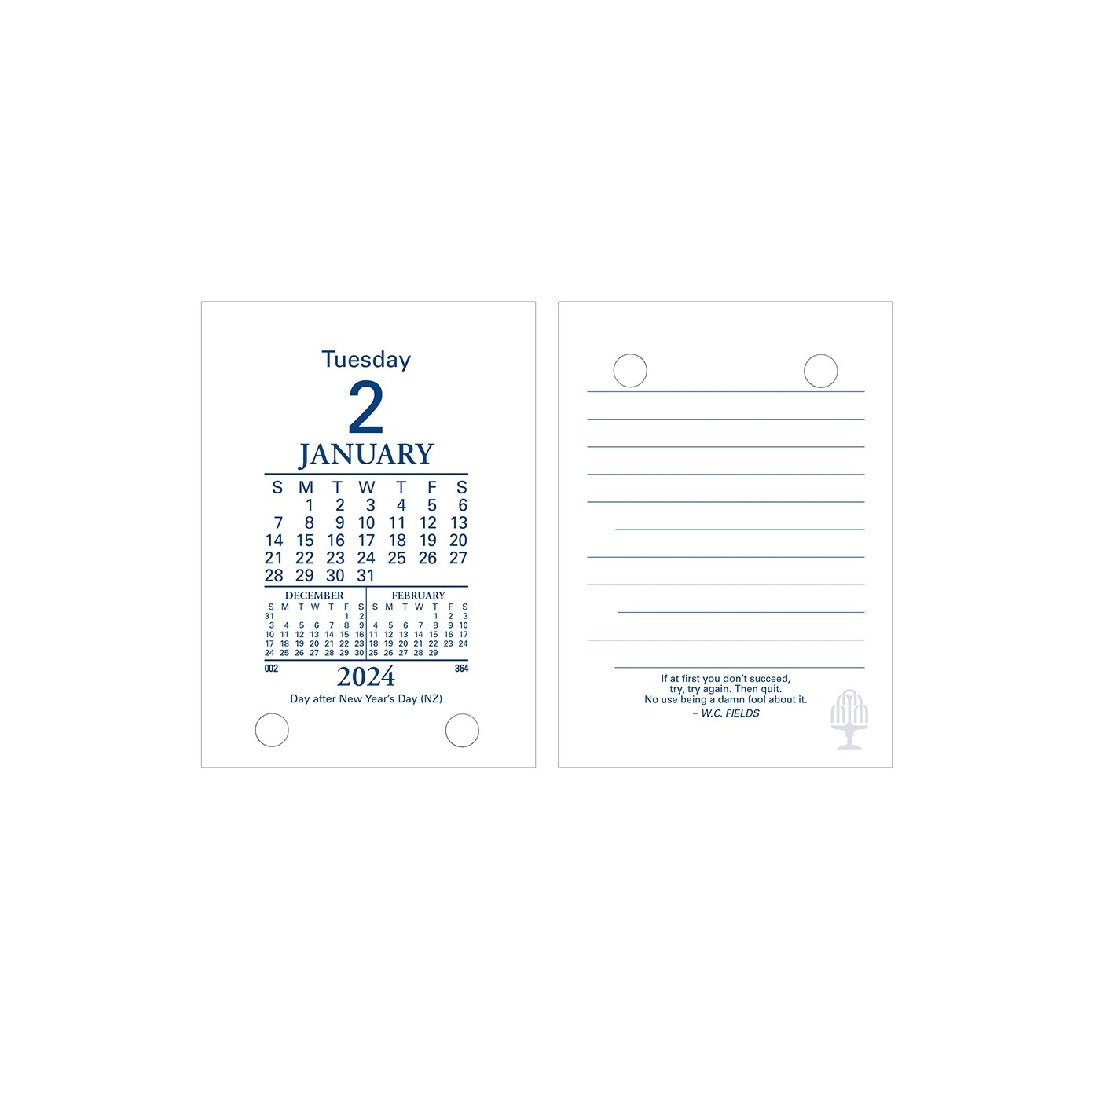 2024 Collins Desk Calendar Refill